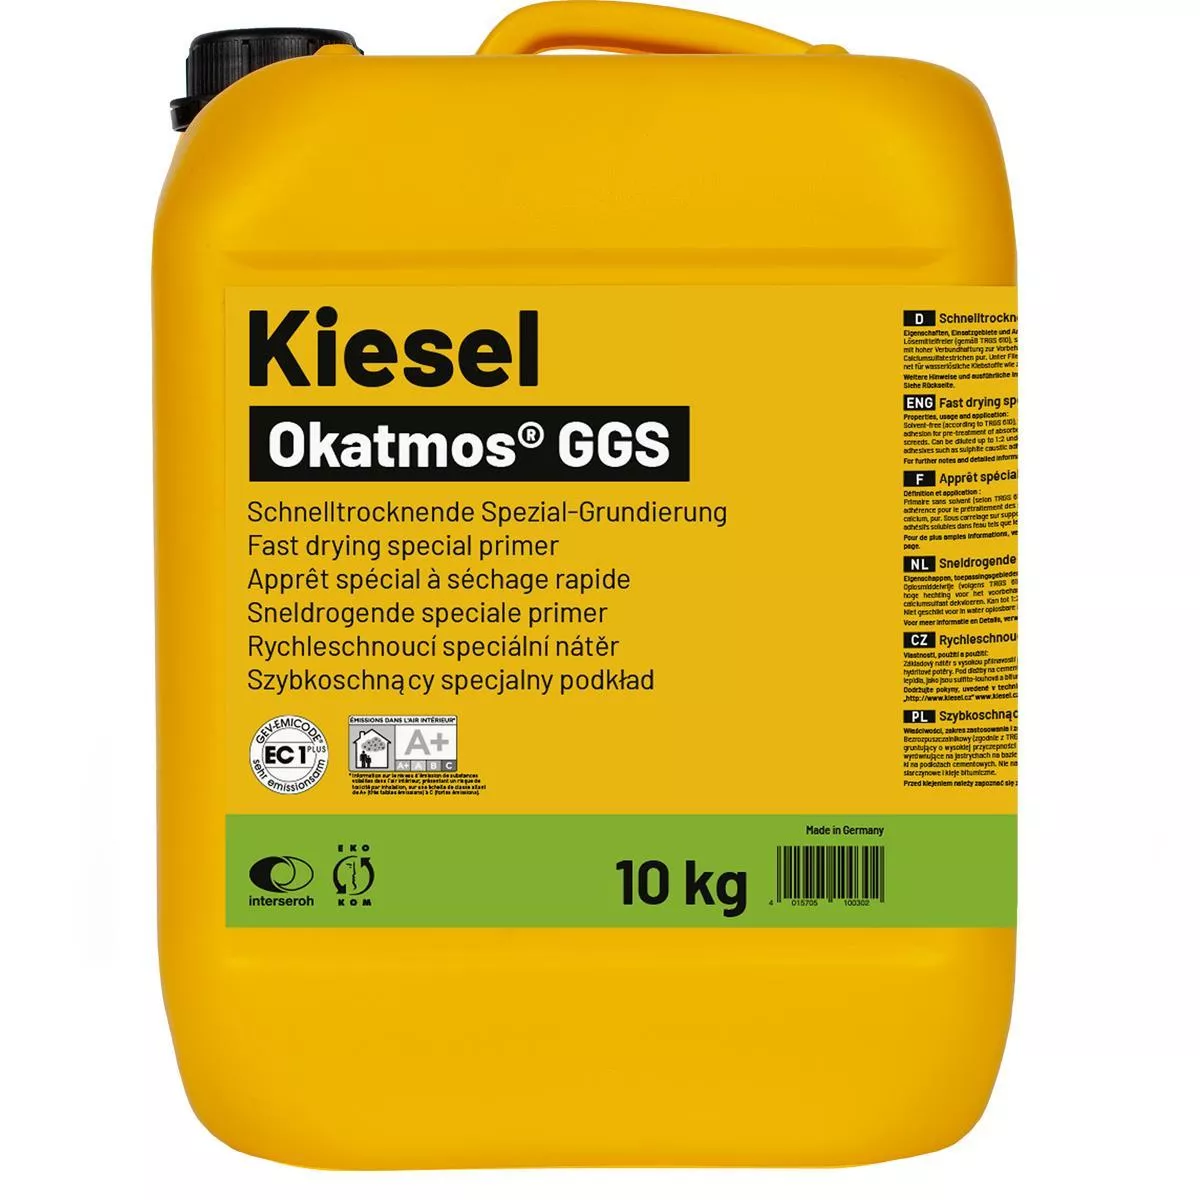 Spezial Grundierung Kiesel Okatmos GGS 10 kg